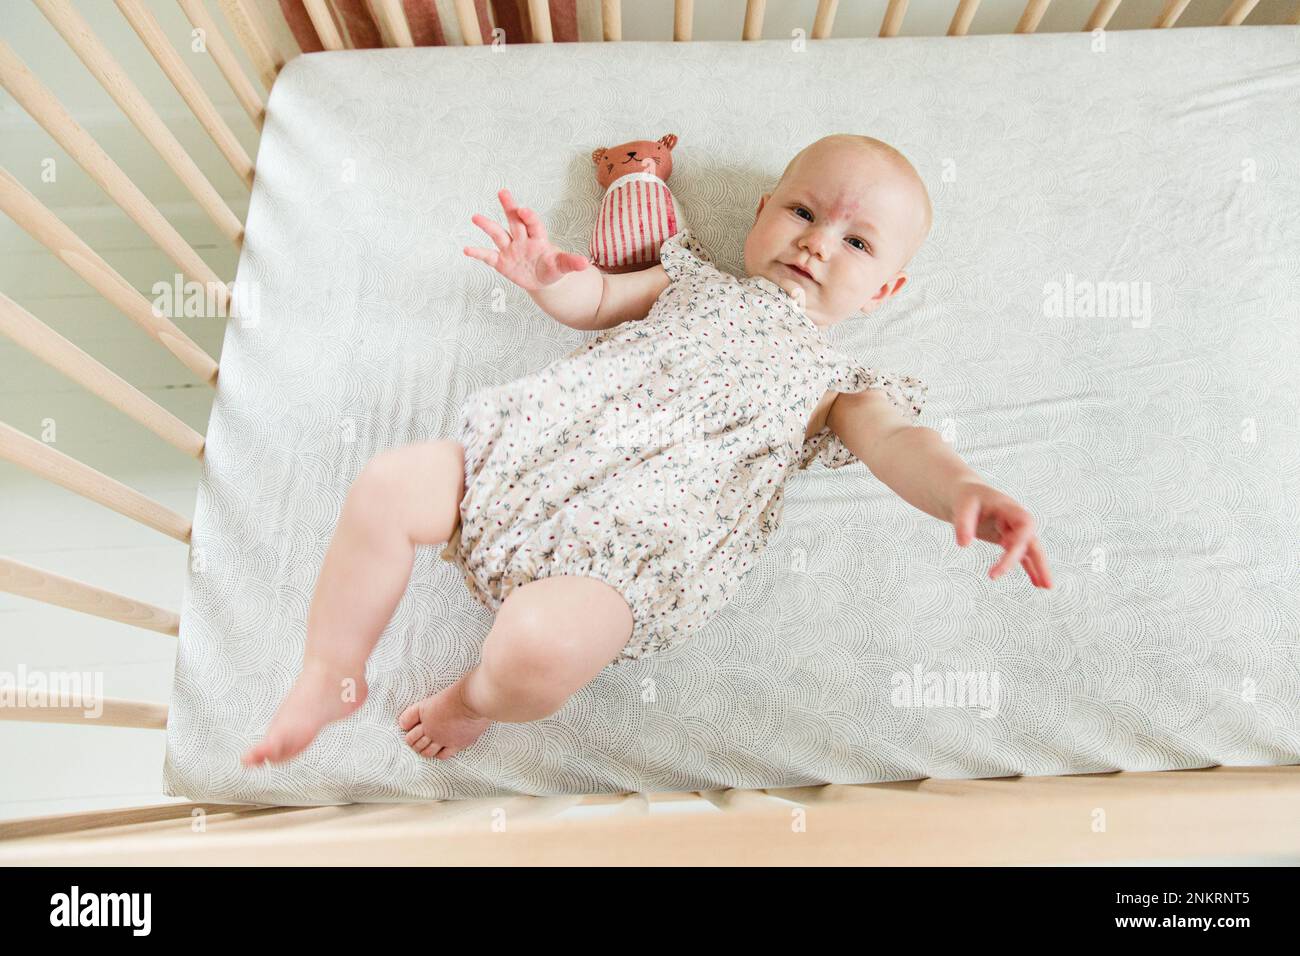 Overhead view of baby girl wearing babygro lying in crib Stock Photo